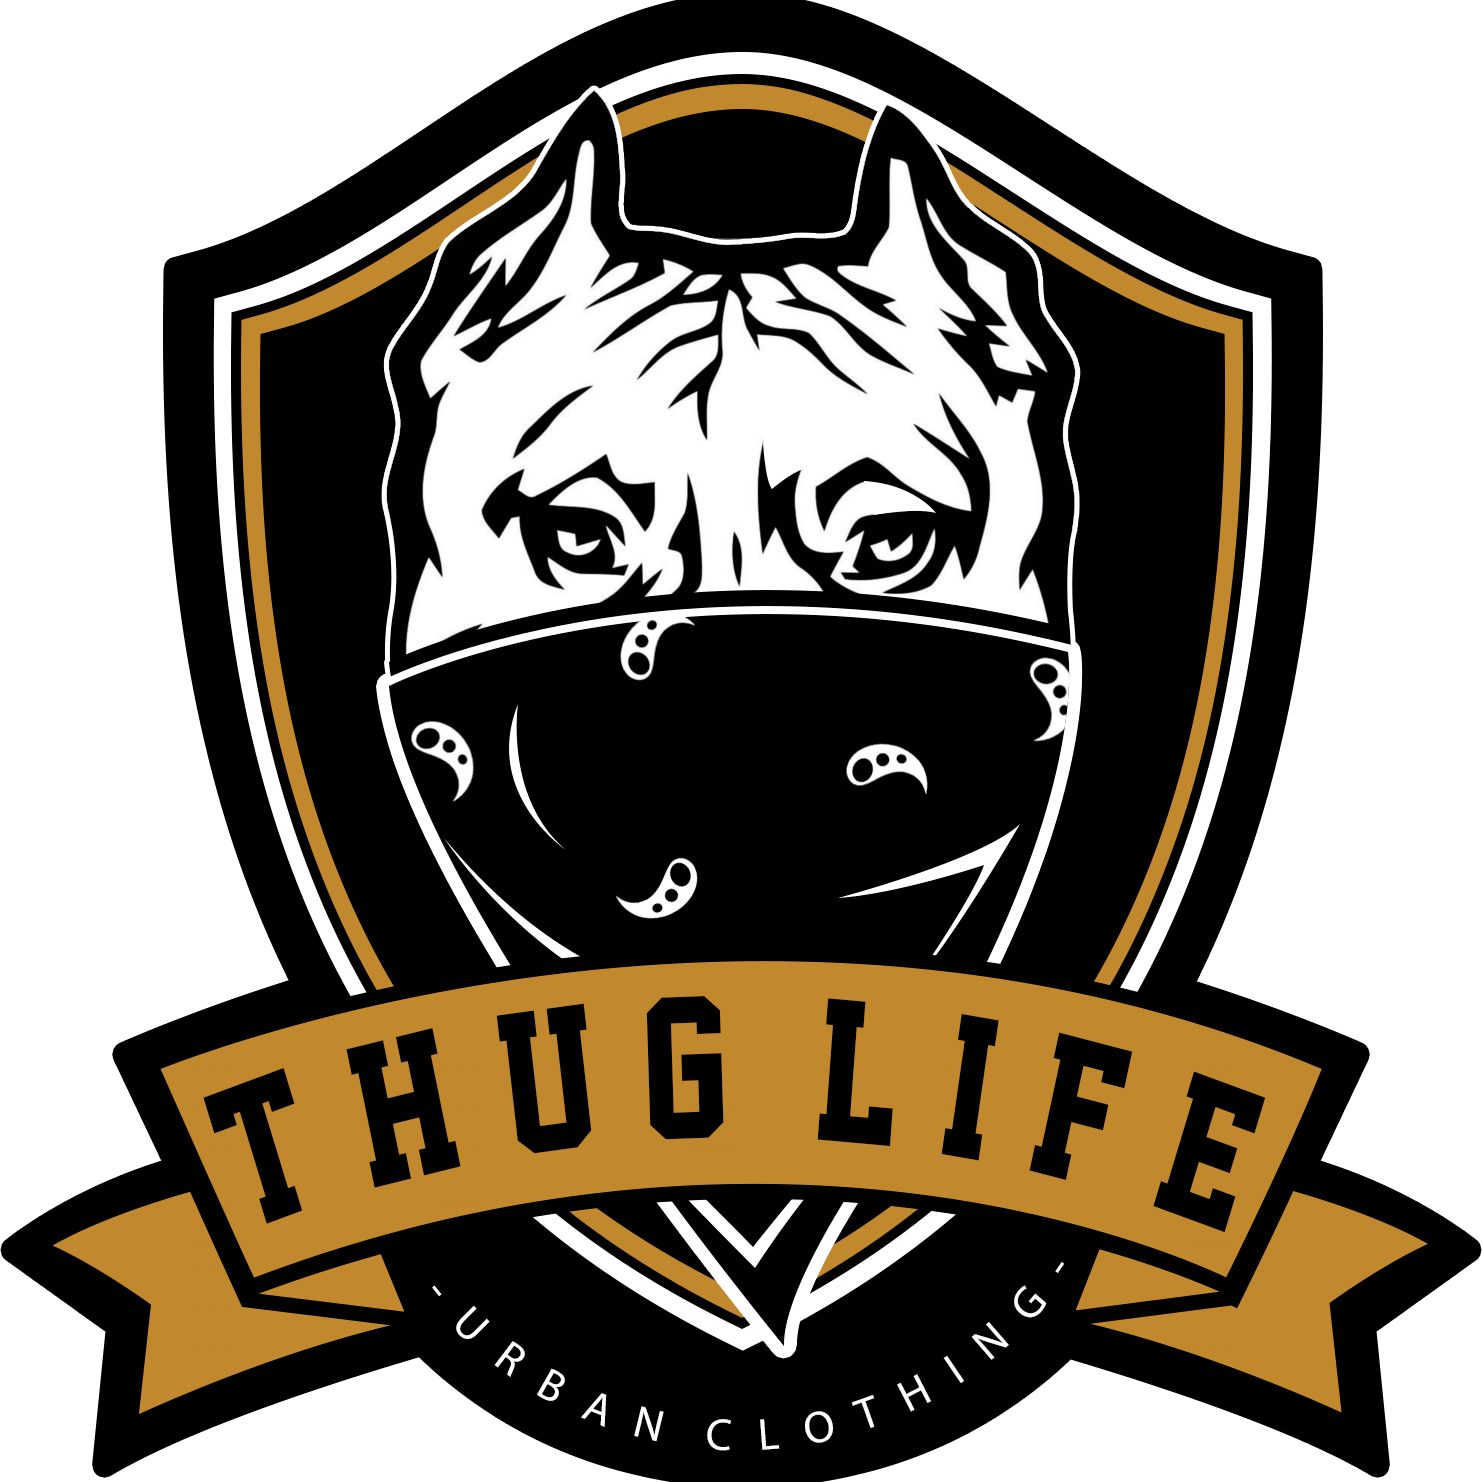 Thug life bancatering ru